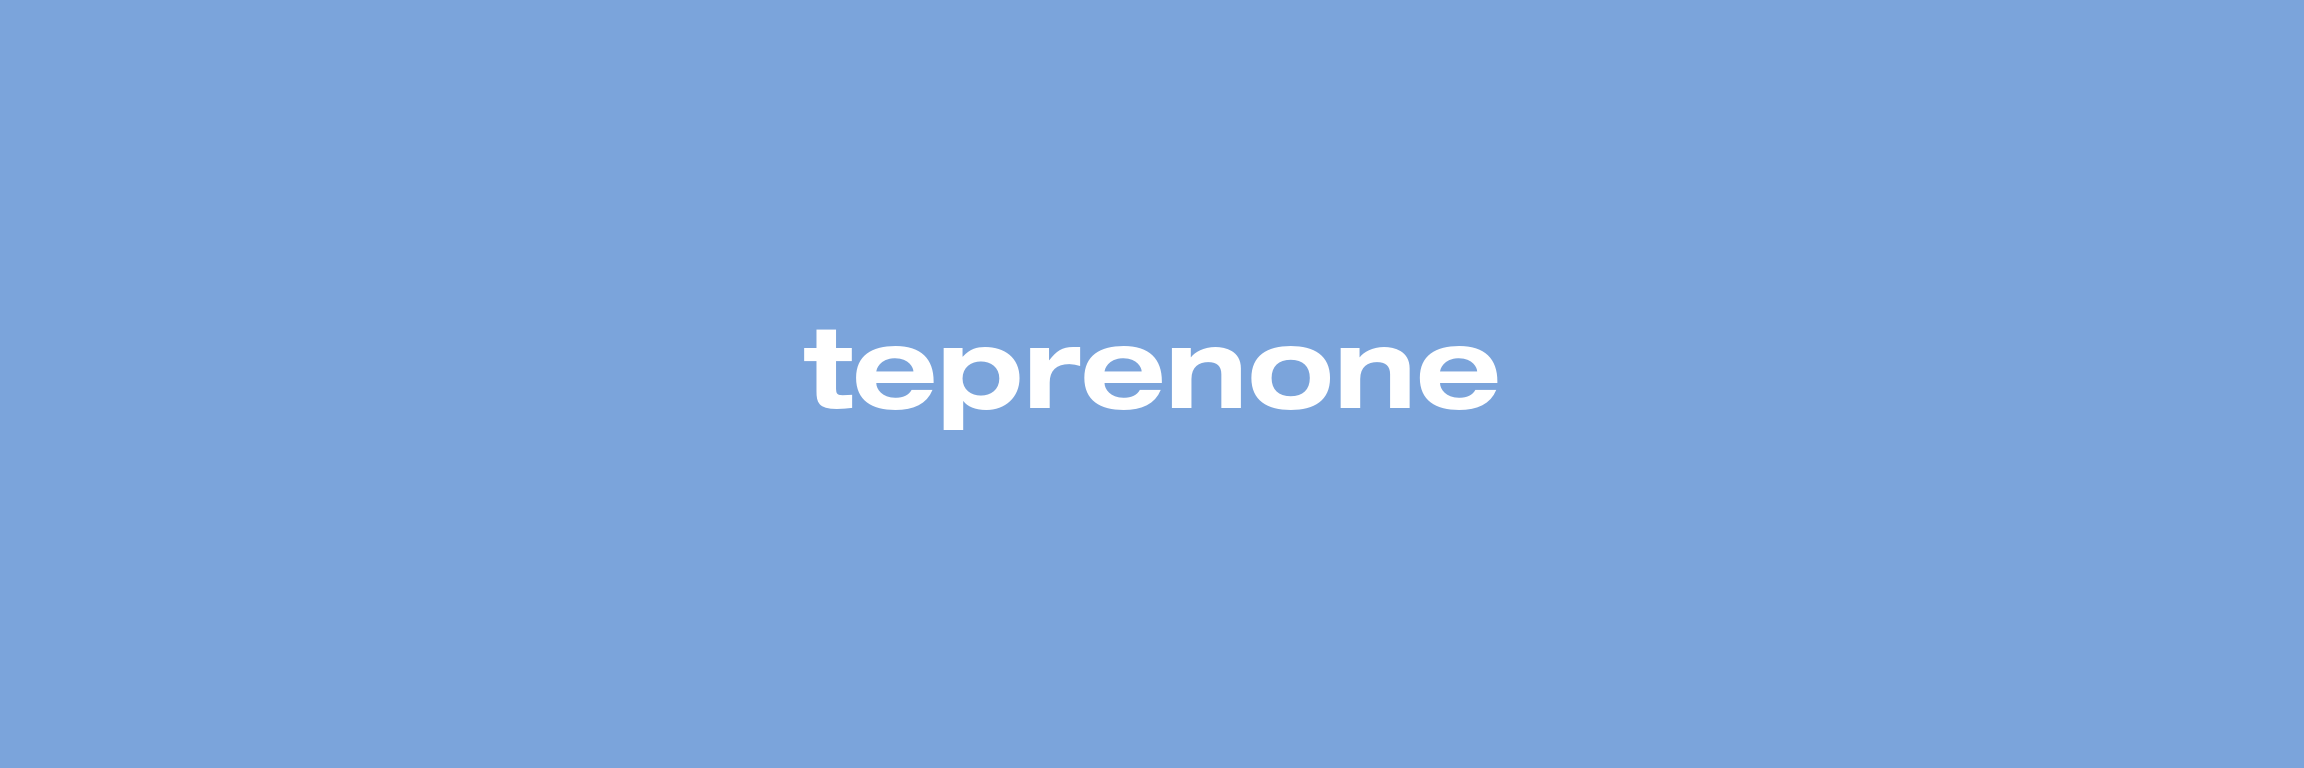 ingredient focus: teprenone